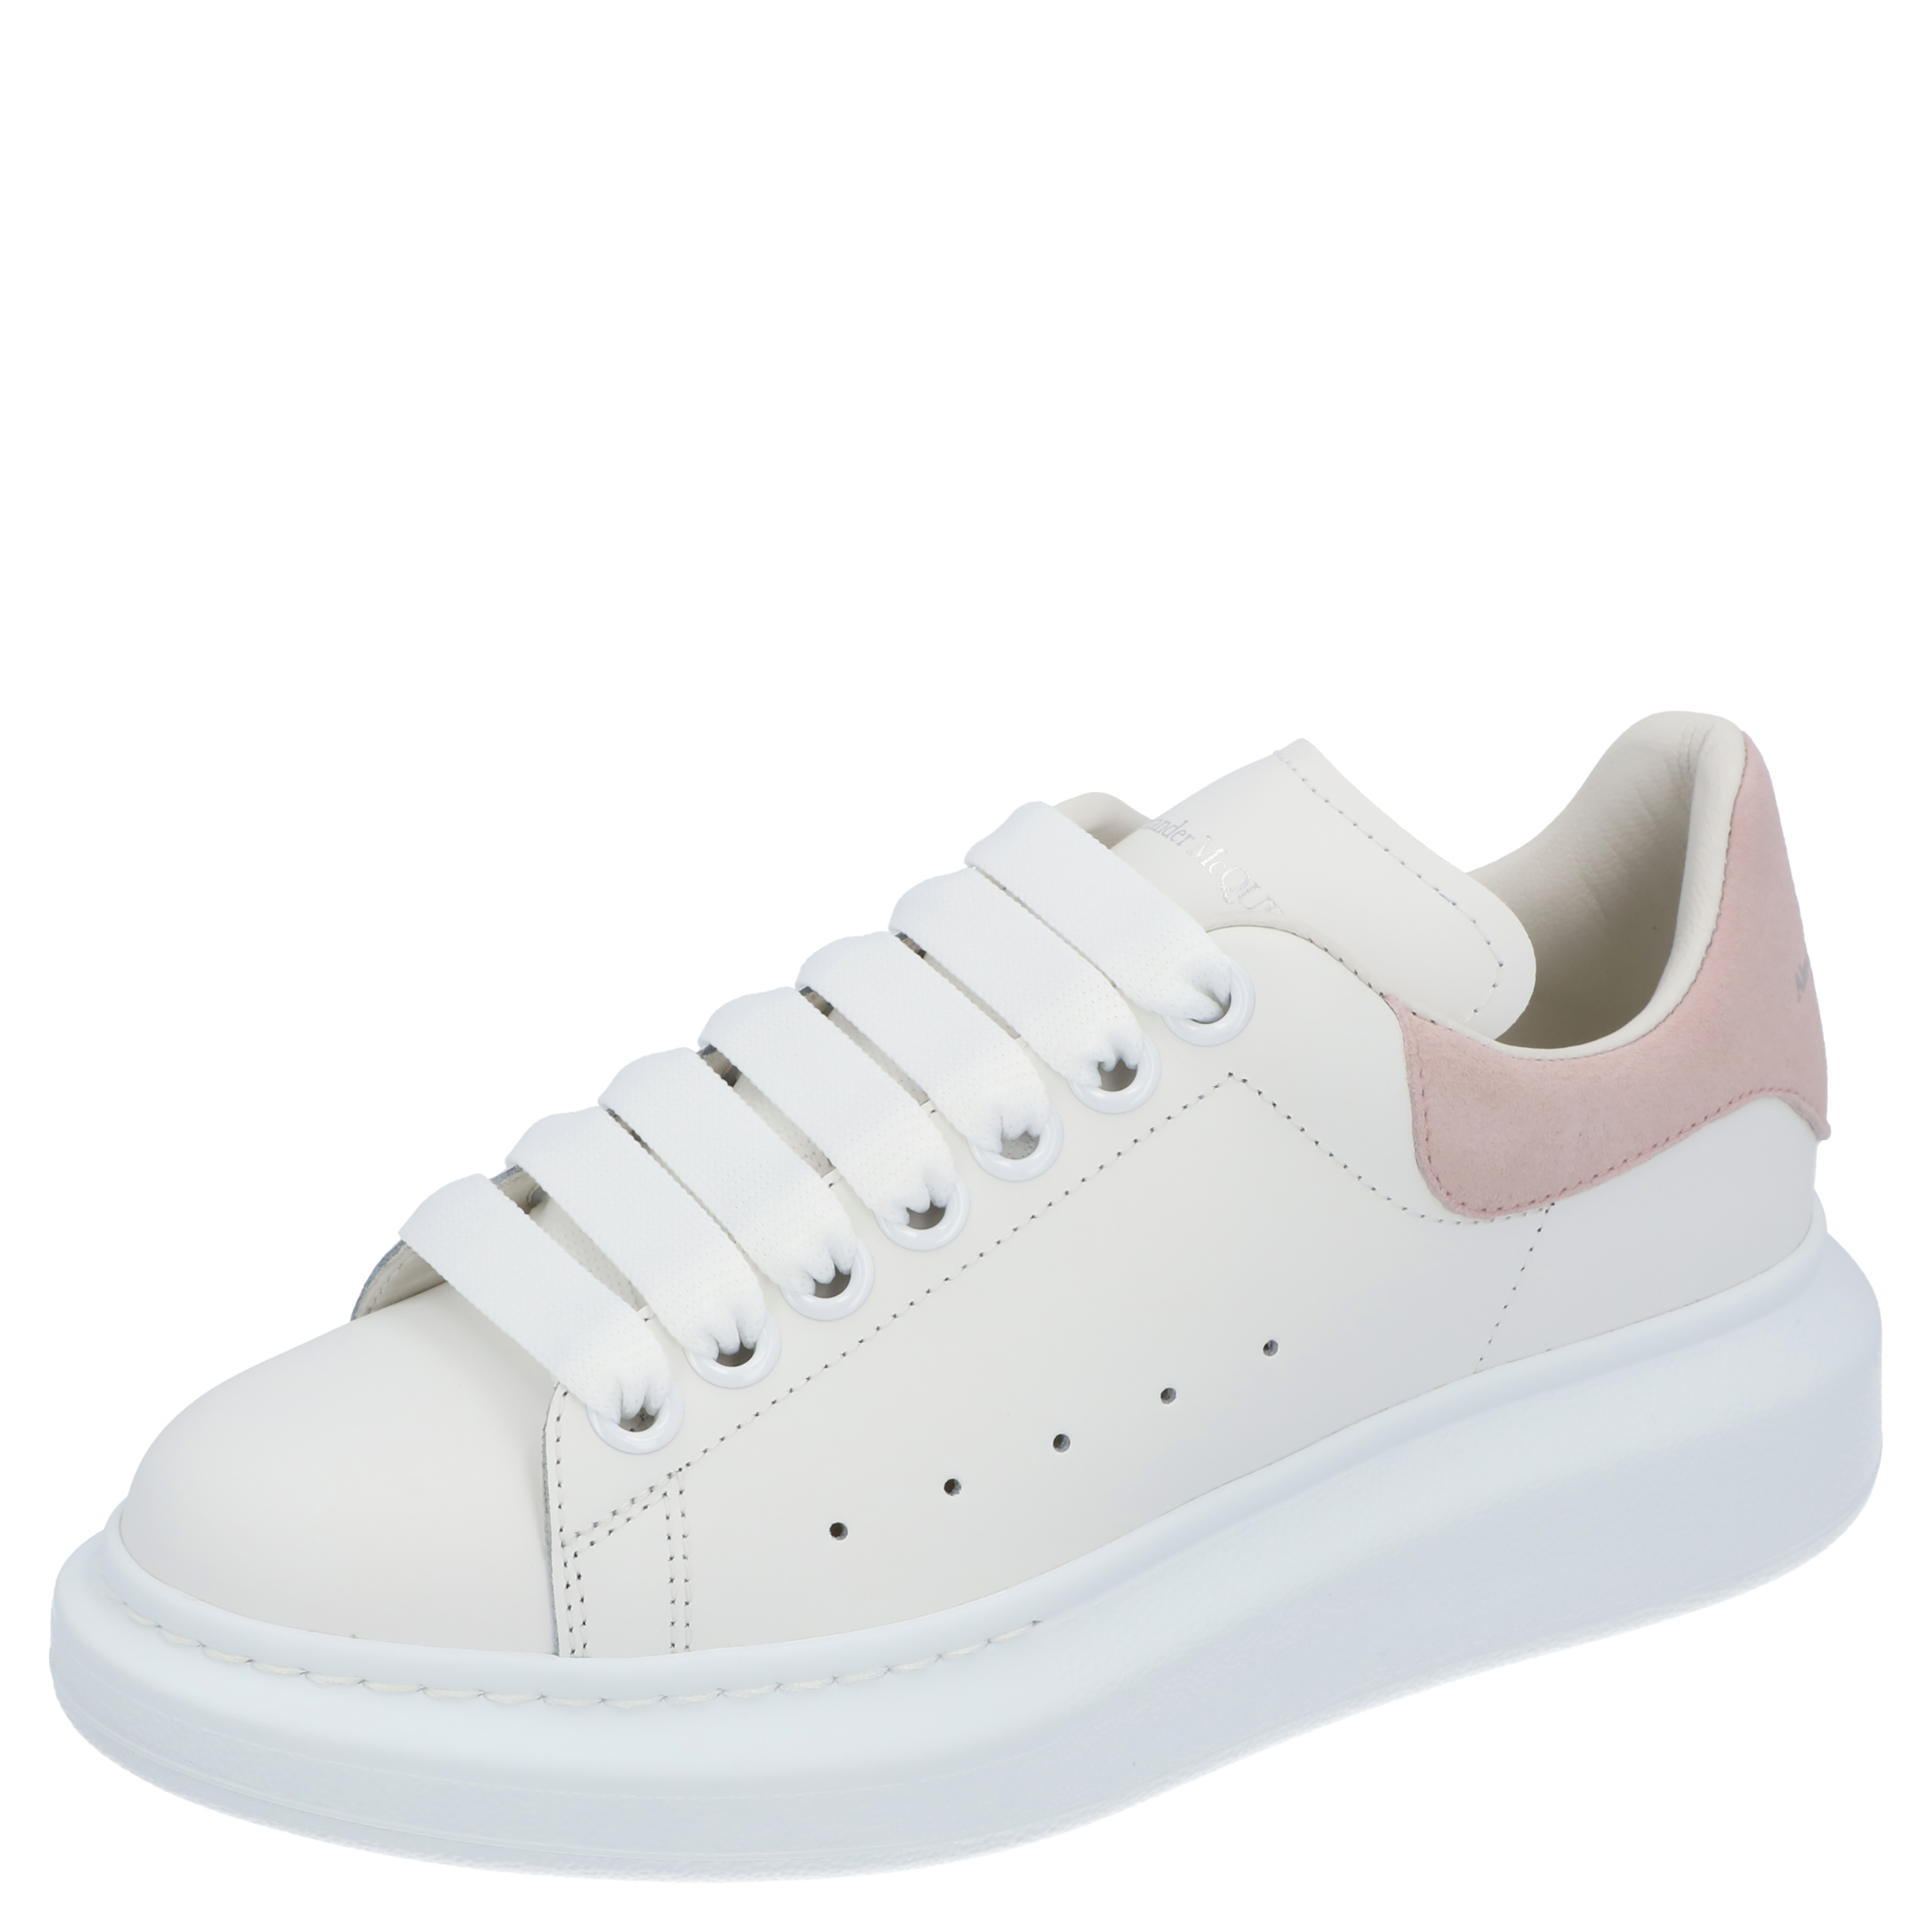 Alexander McQueen White/Pink Oversized Sneakers Size EU 37.5